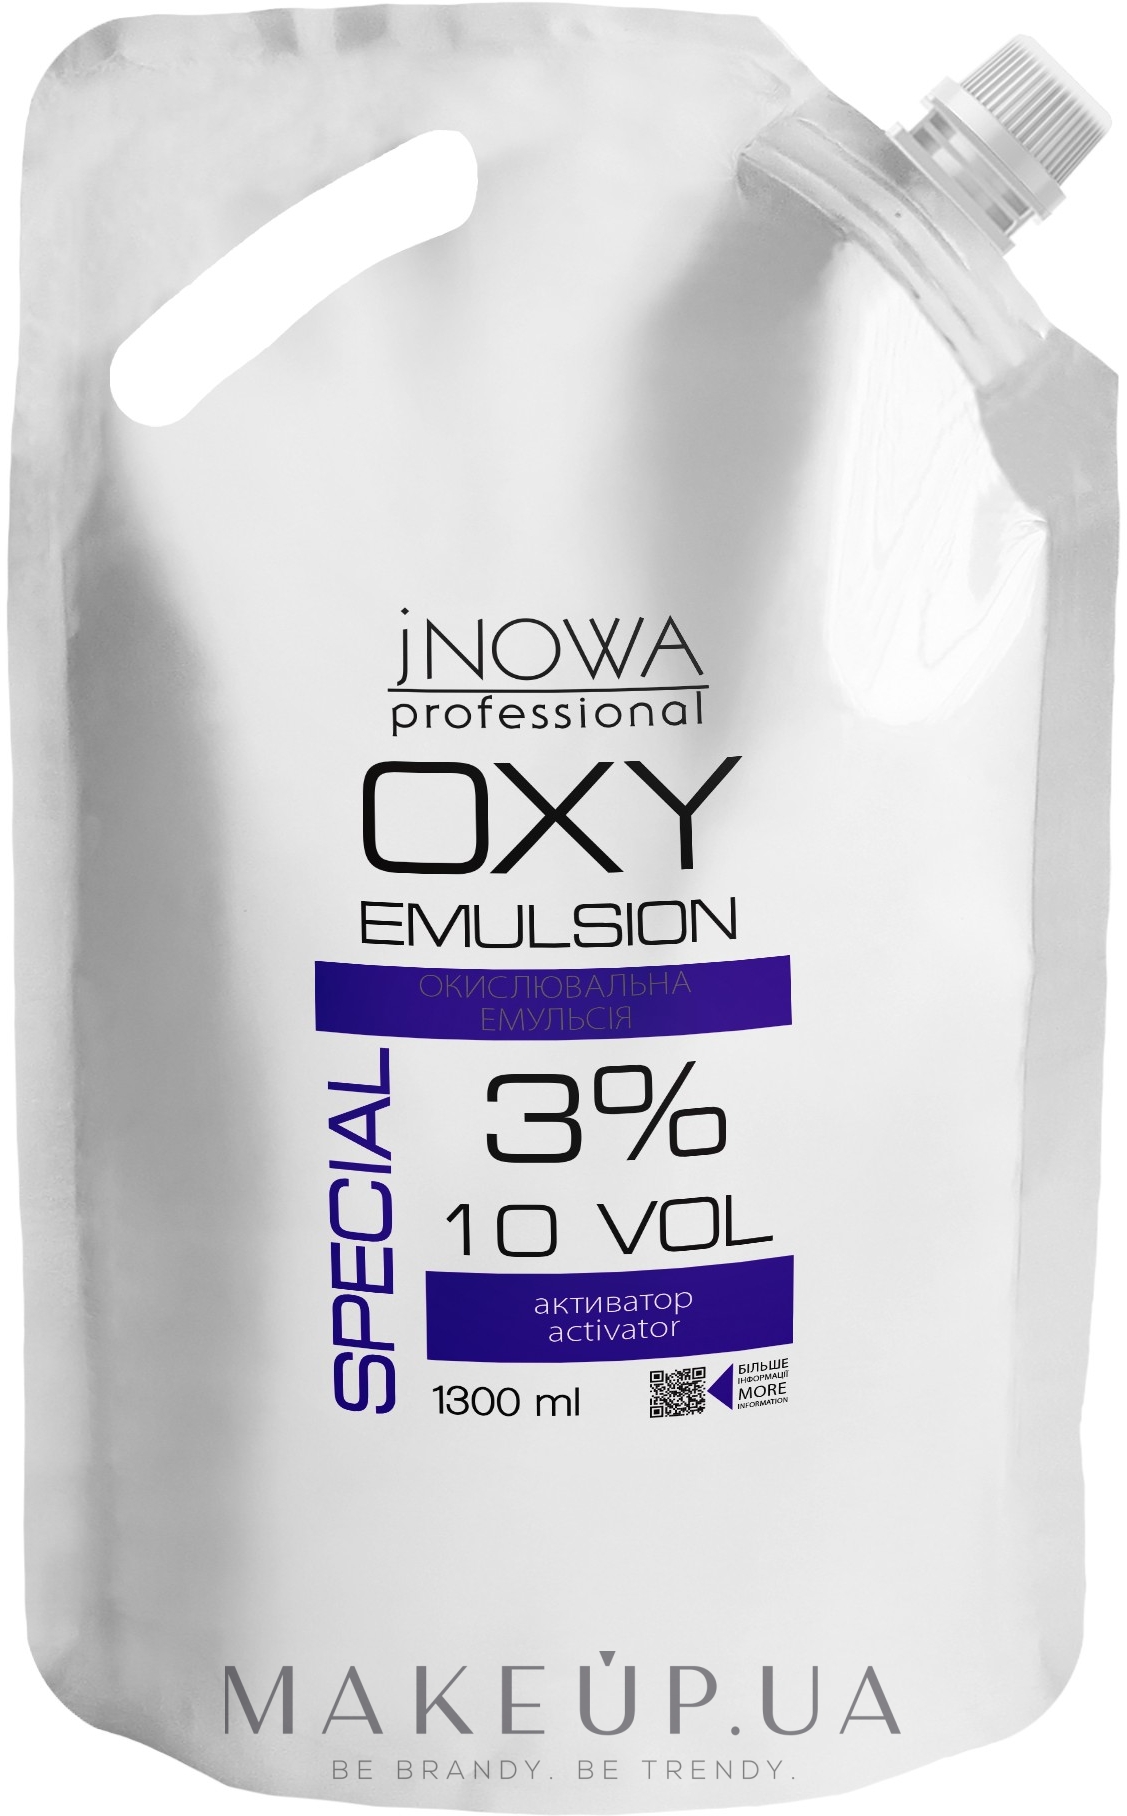 Окислювальна емульсія 3% - jNOWA Professional OXY Emulsion Special 10 vol (дой-пак) — фото 1300ml